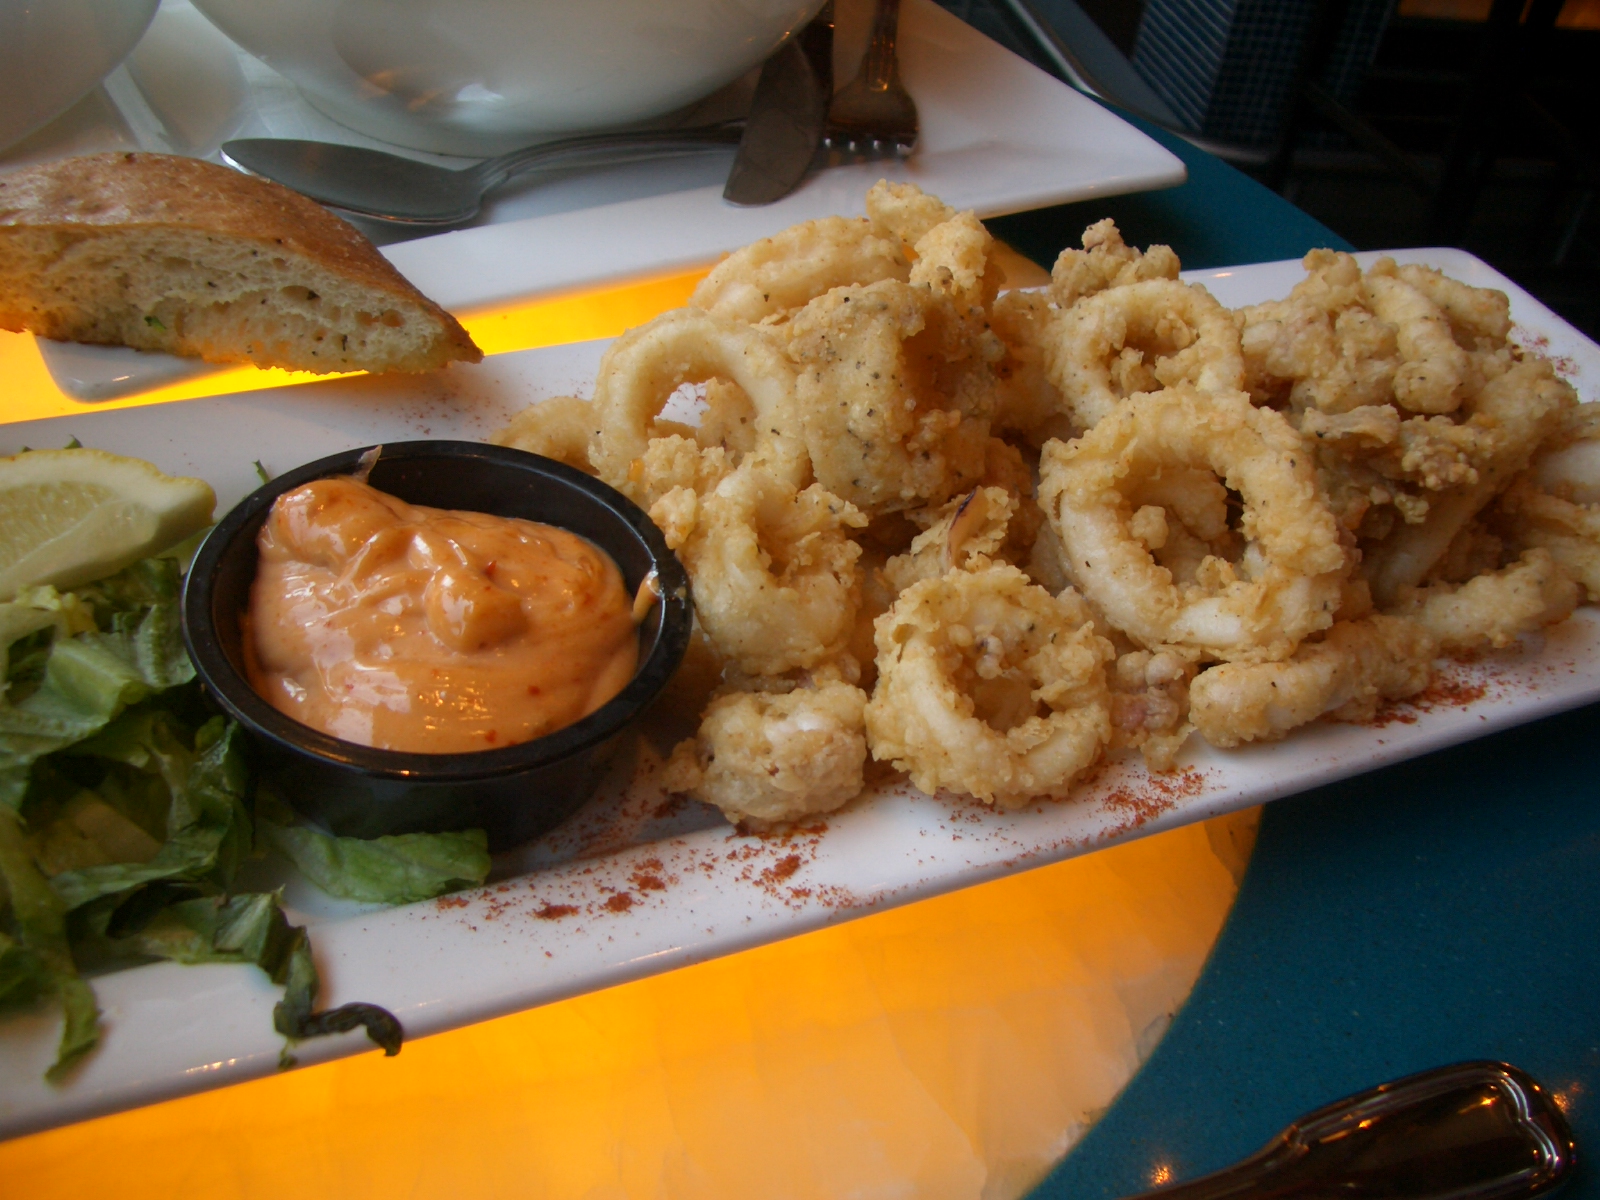 A photograph of Fried calamari (squid).